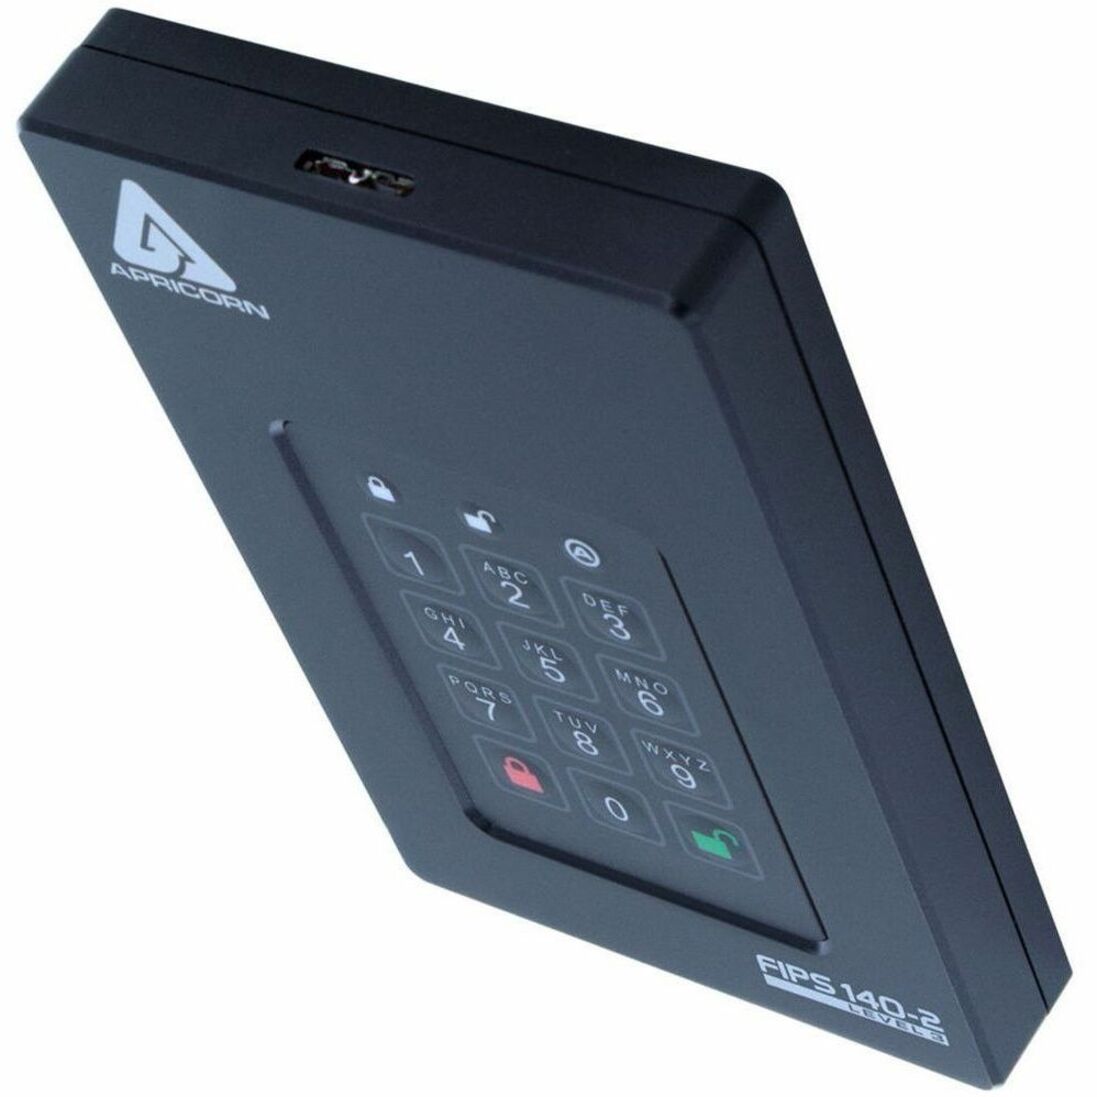 Apricorn AFL3- S4TB Aegis Fortress L3 Solid State Drive, 4 TB External, USB 3.0, Hardware Encryption